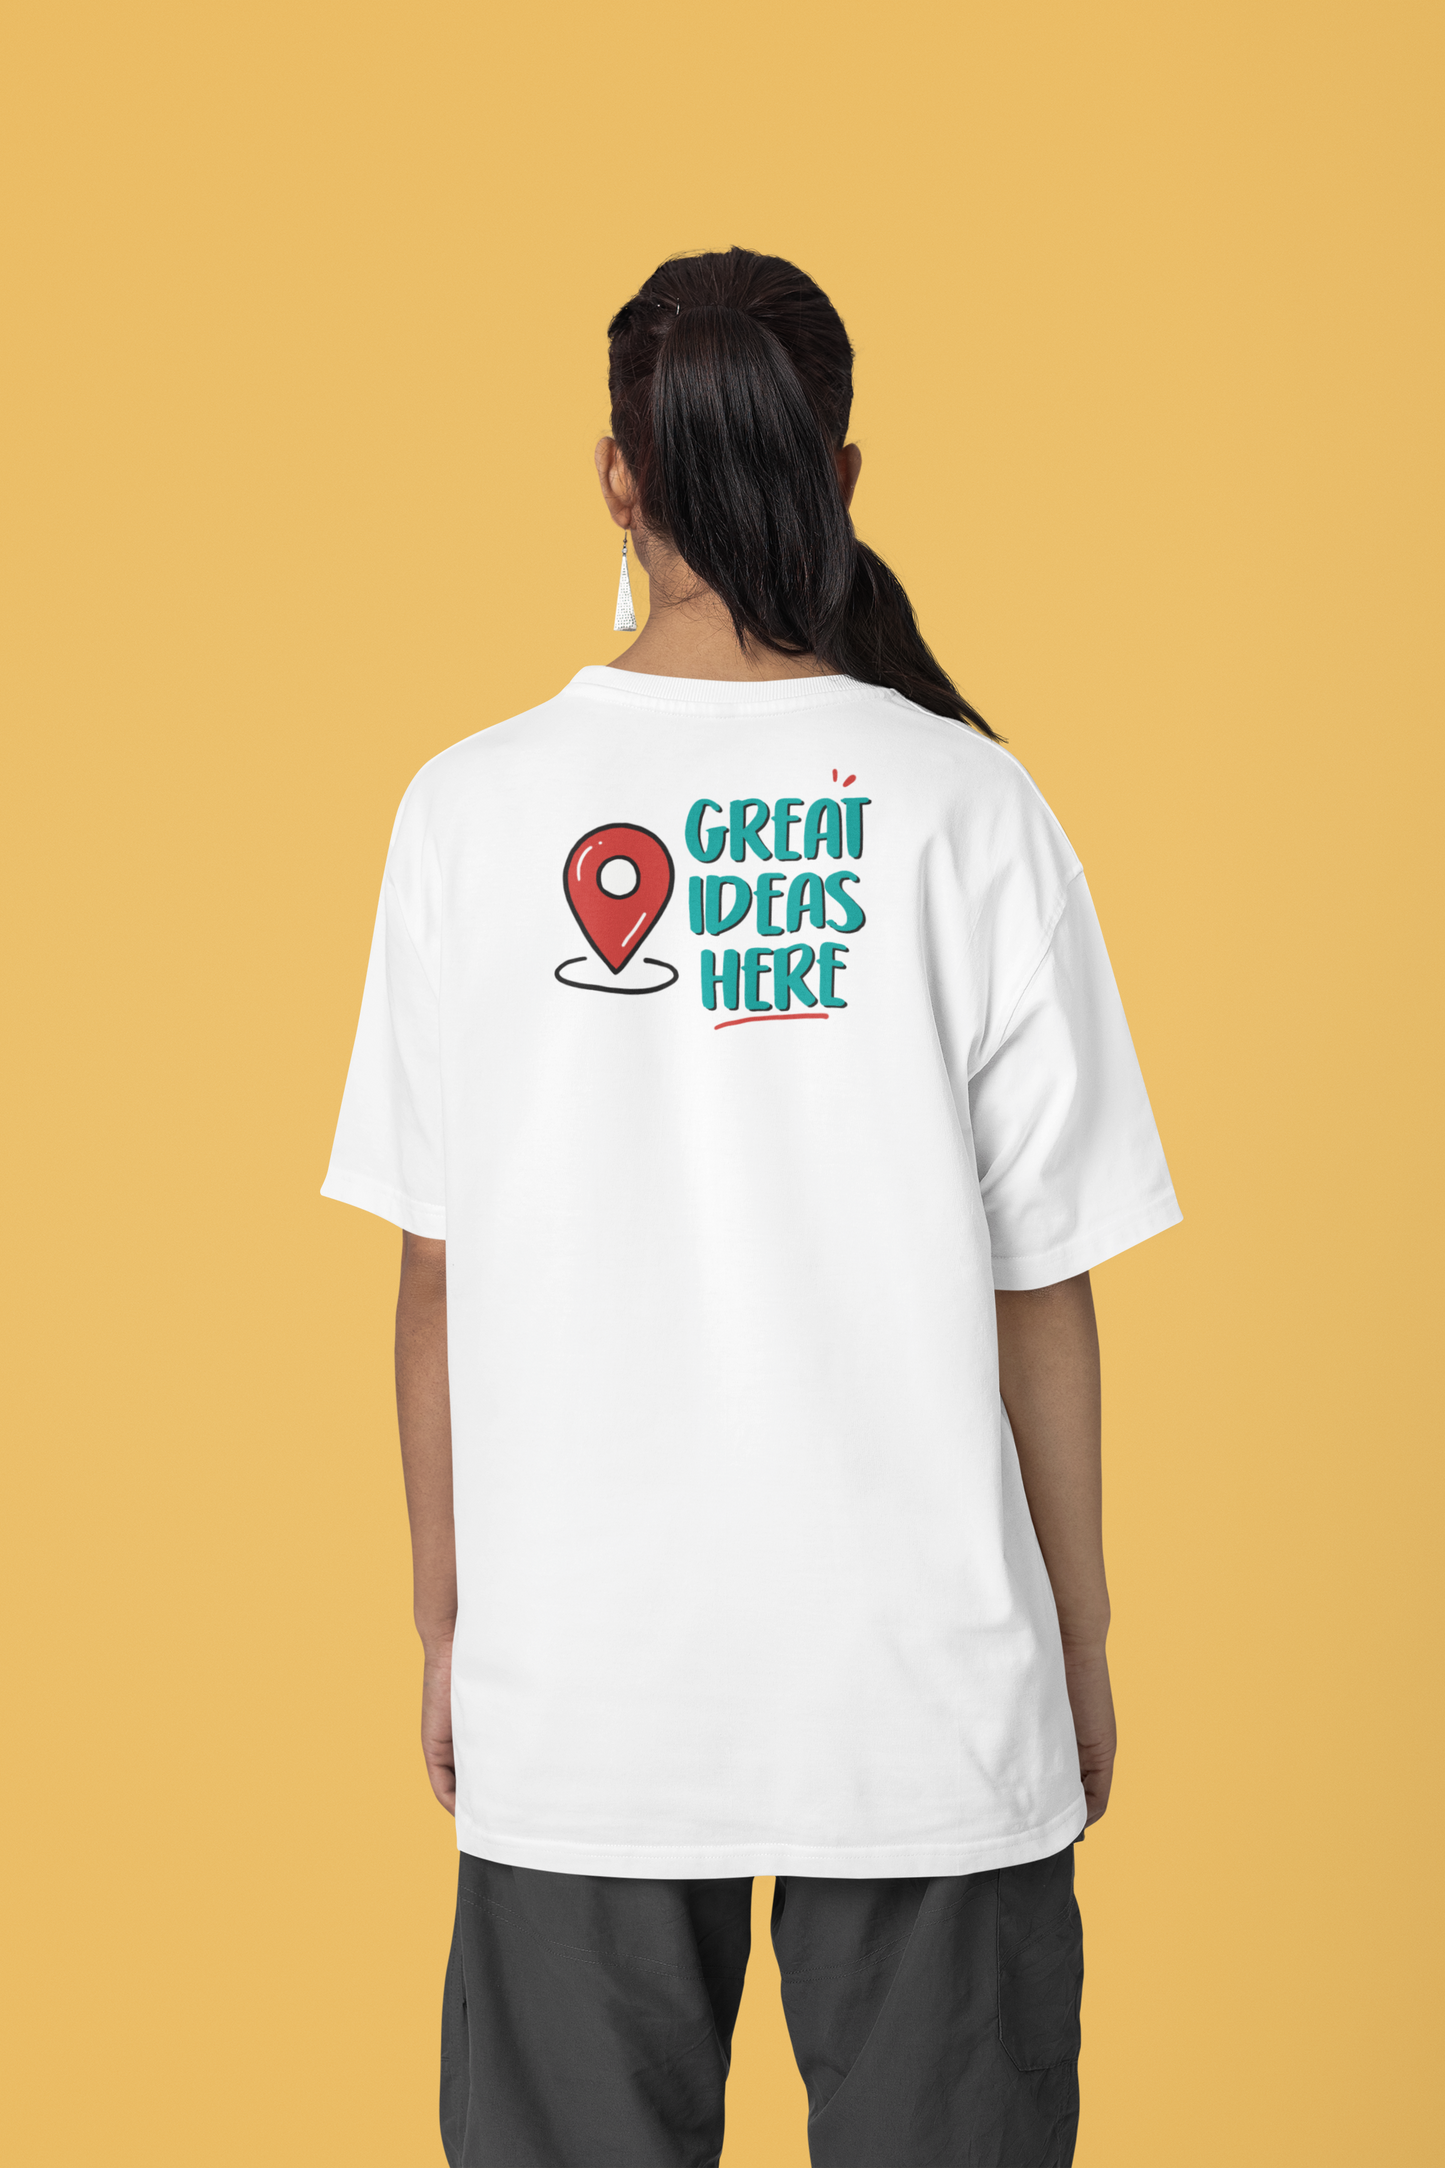 Corporat Great Ideas Here Oversized T-Shirt